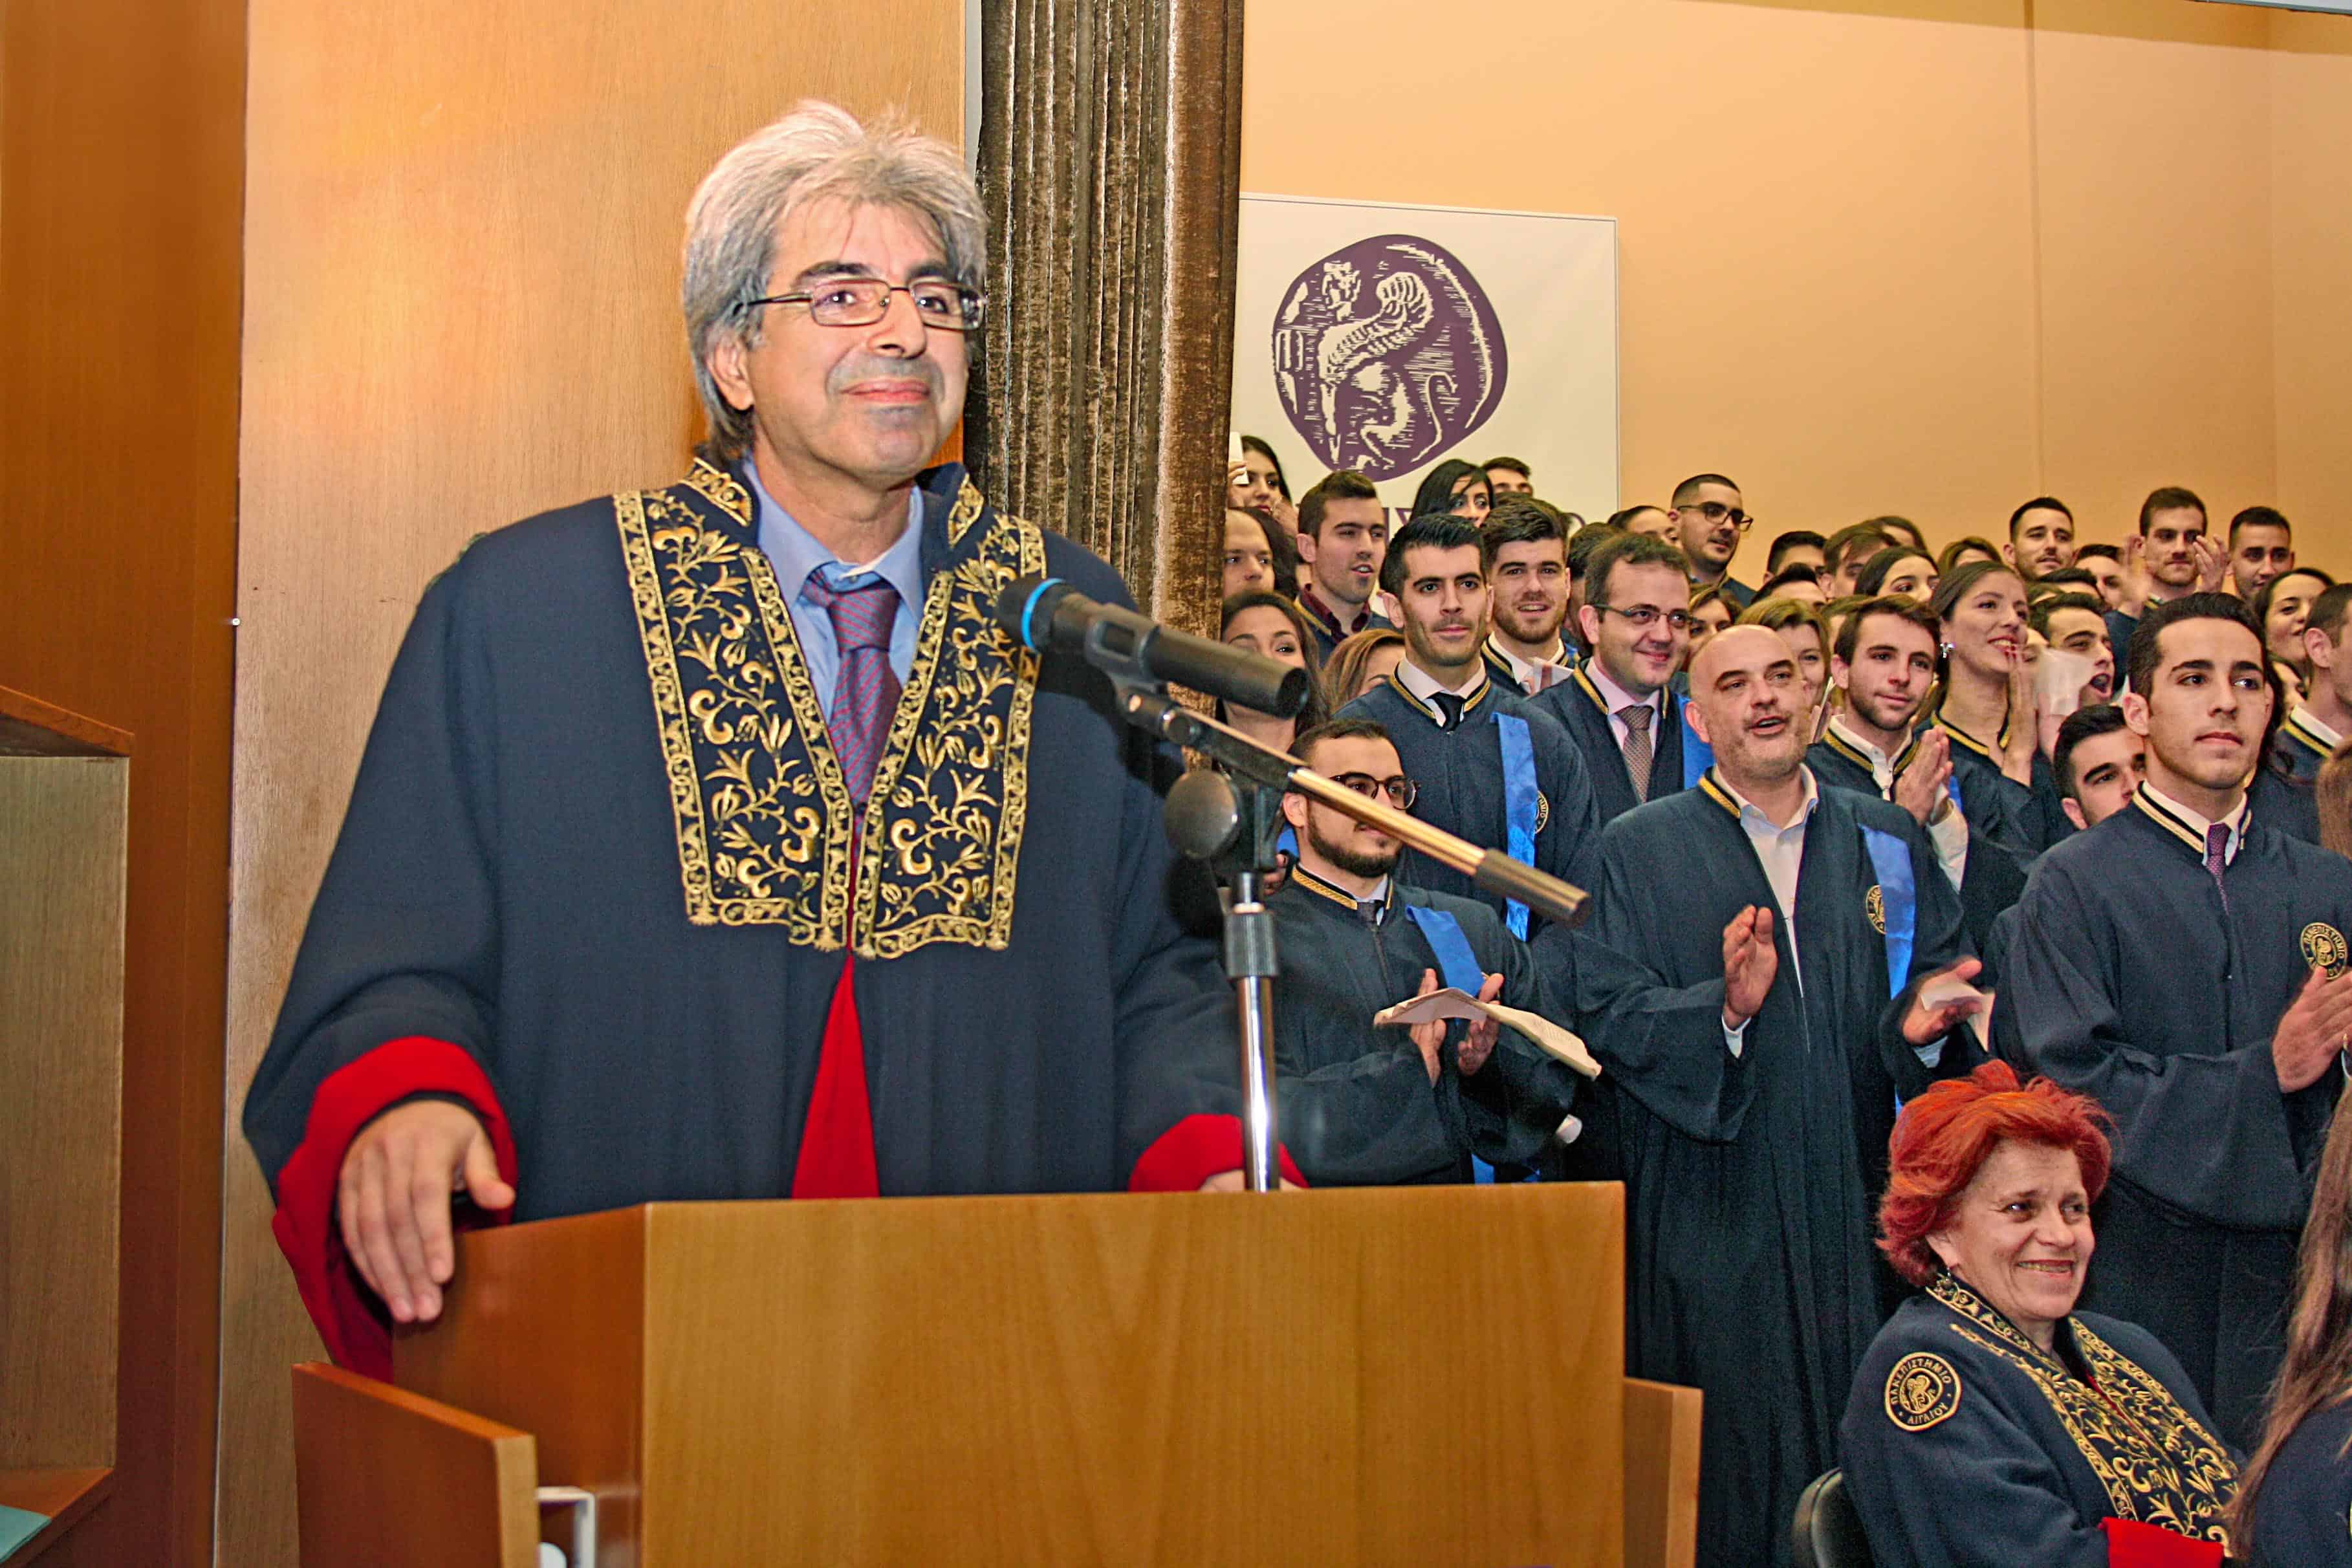 O καθηγητής και πρόεδρος του Τμήματος Ναυτιλίας και Επιχειρηματικών Υπηρεσιών, Σεραφείμ Κάπρος